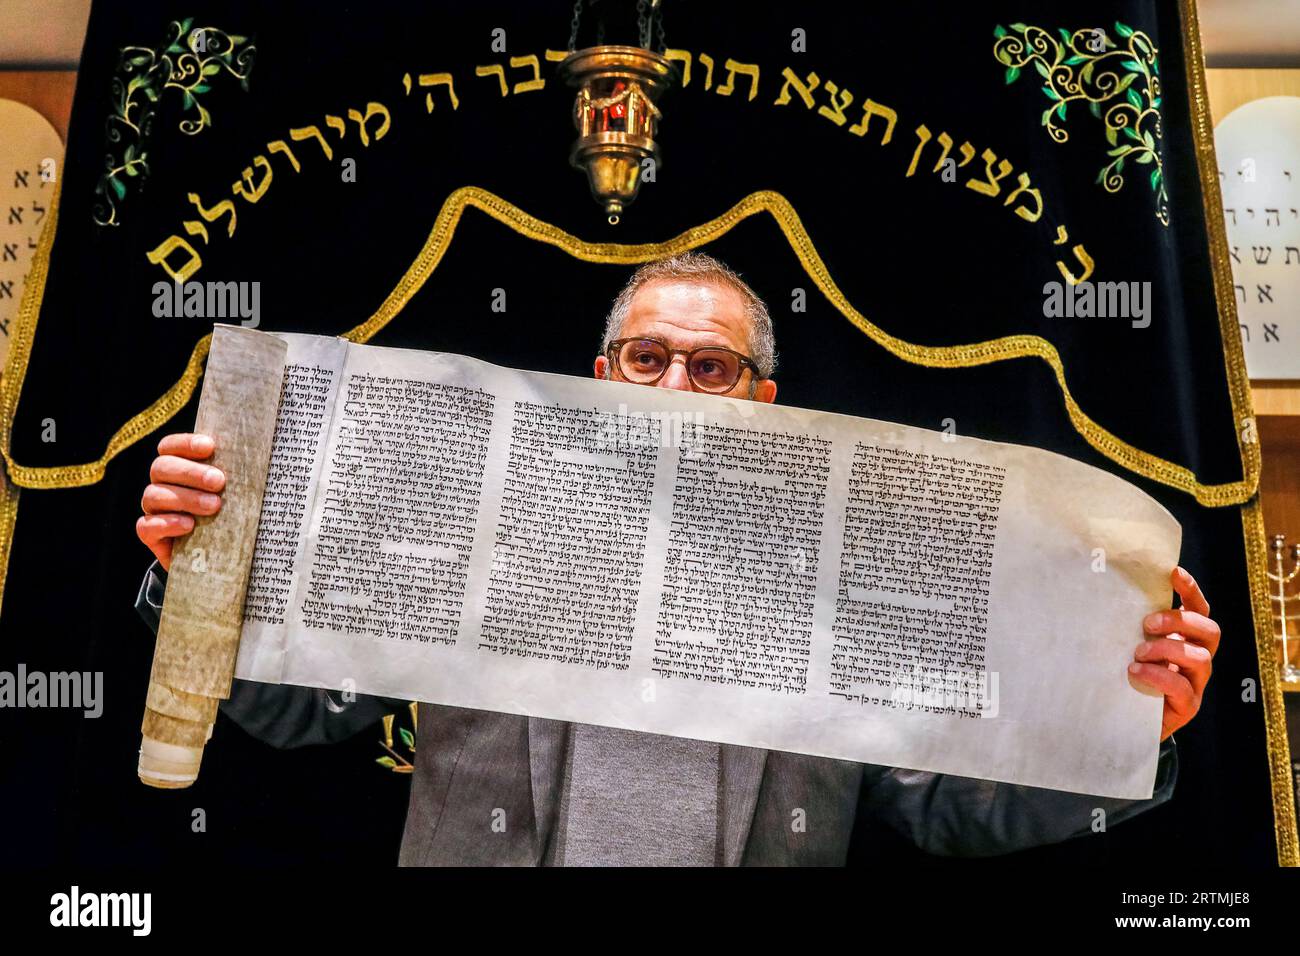 Jewish community center celebrates dedication of its first Torah scroll